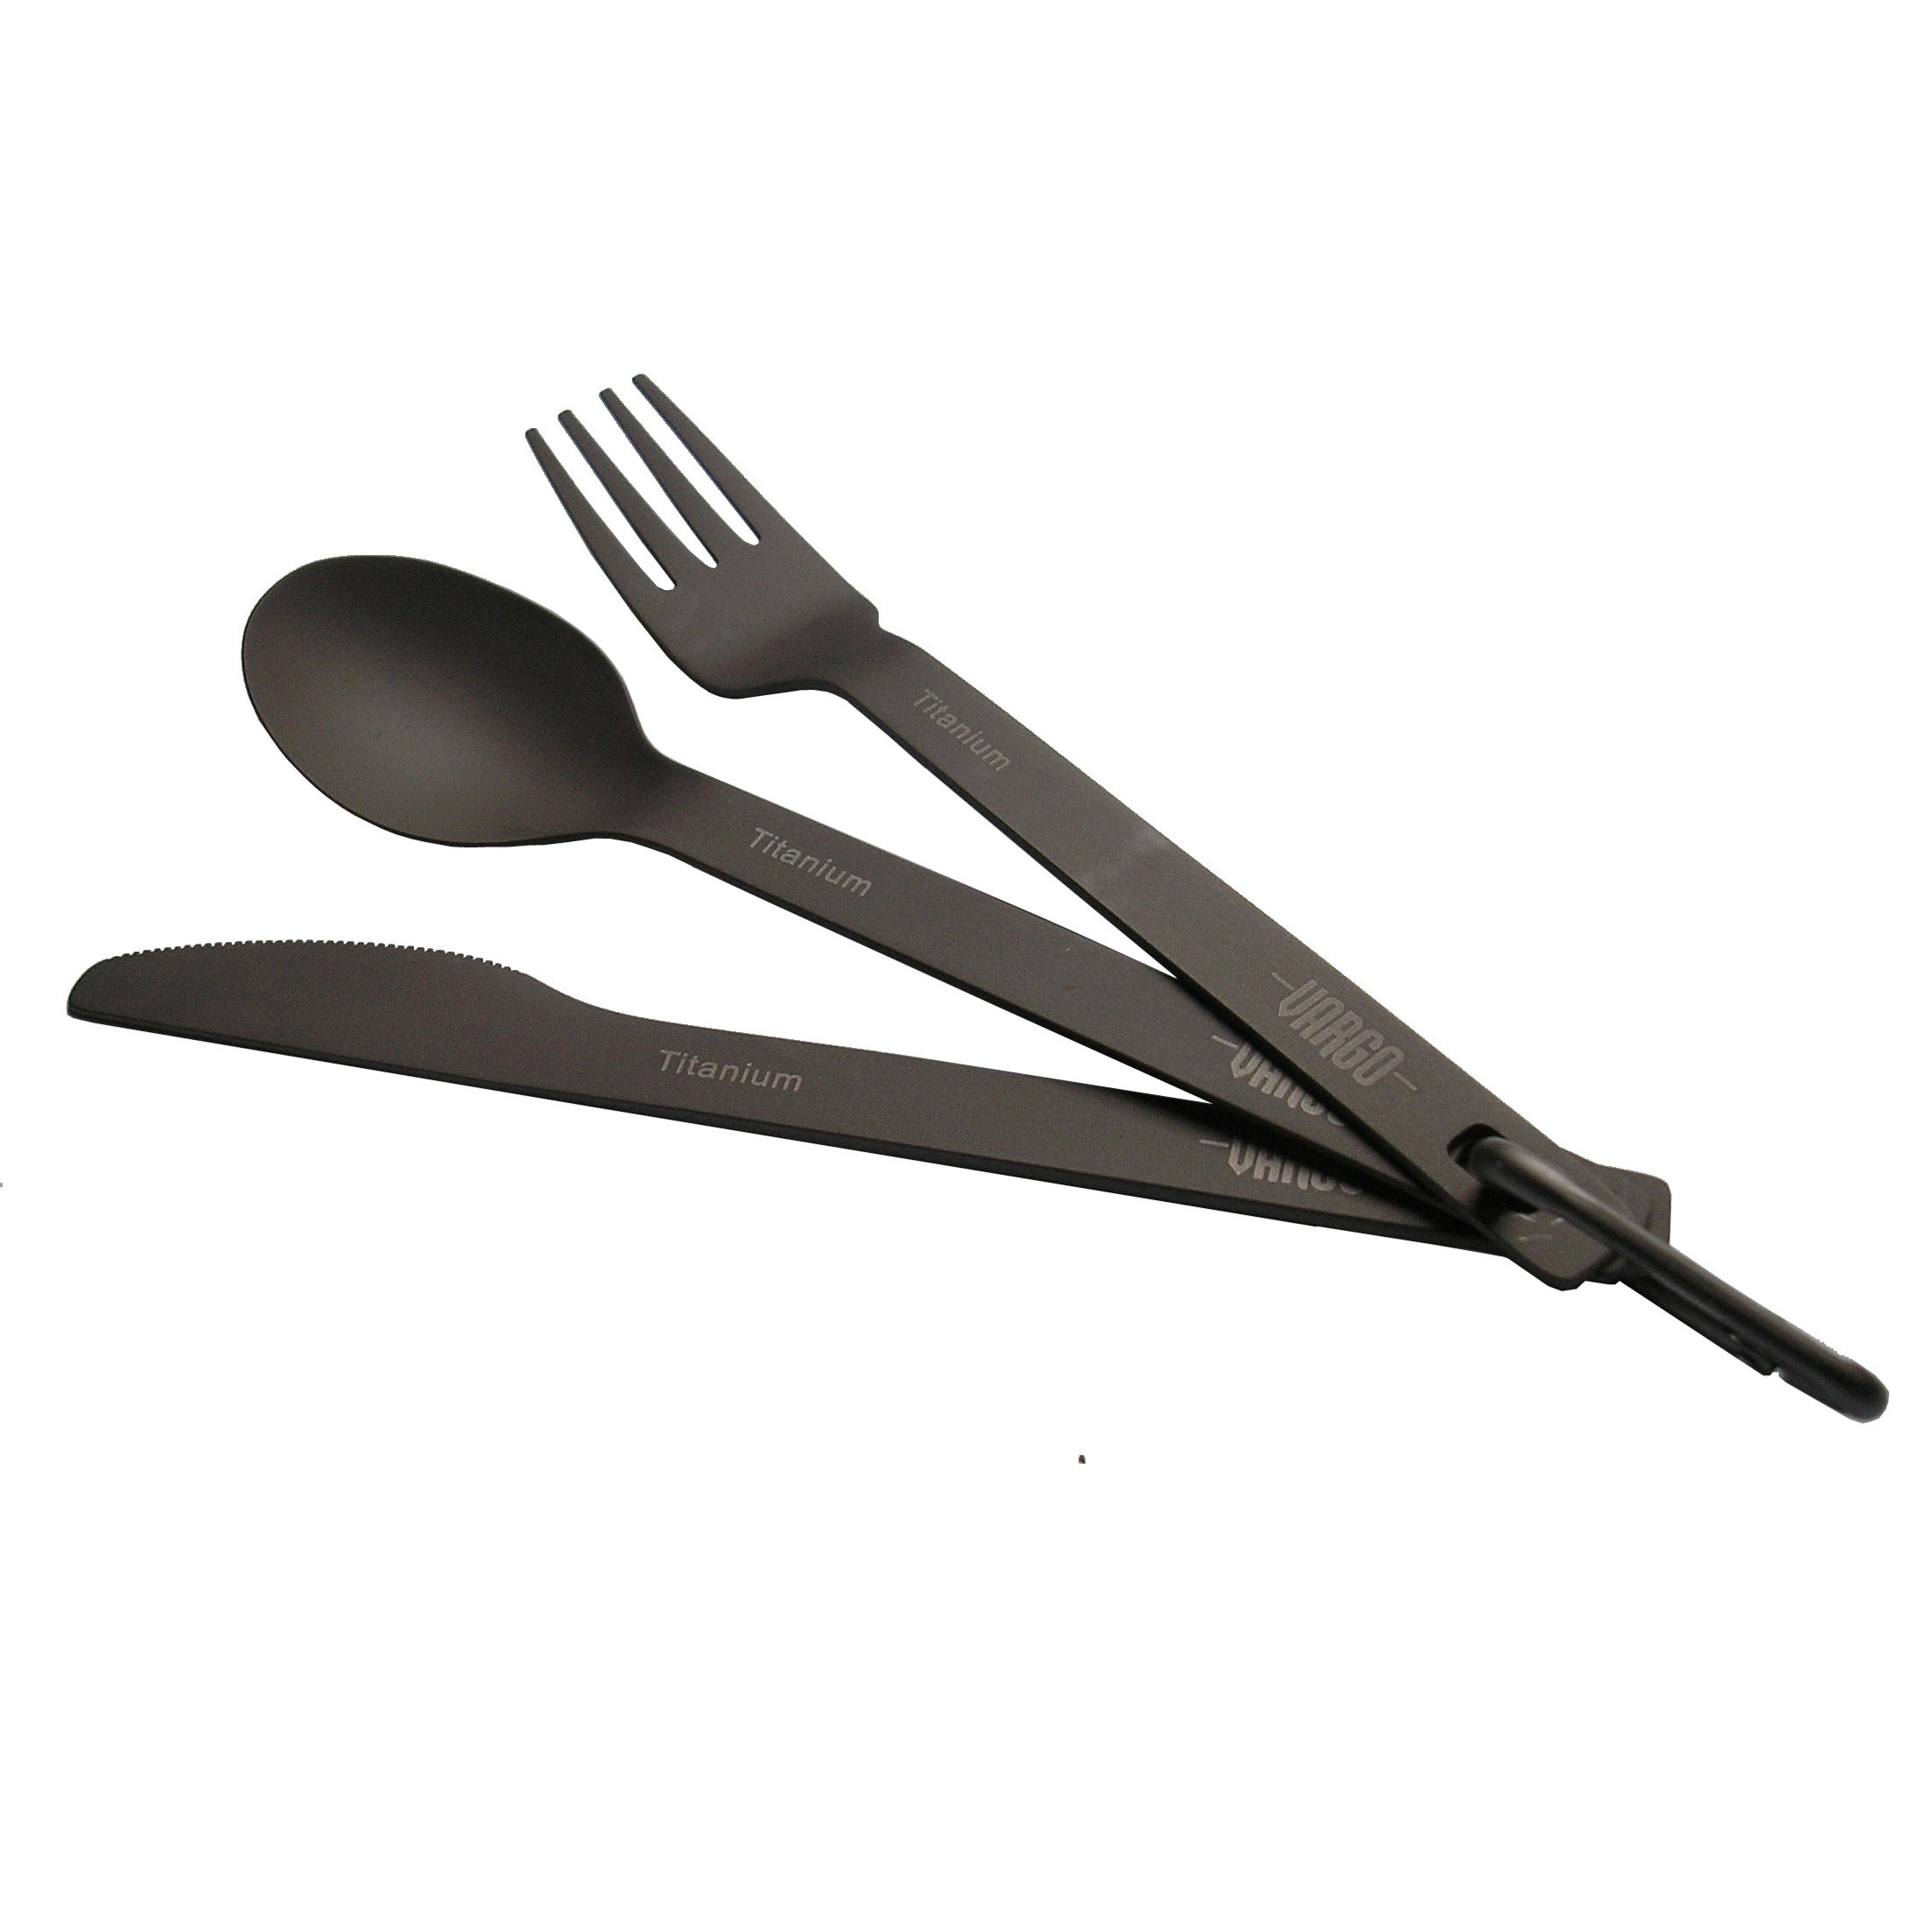 Vargo Titanium Spoon/Fork/Knife Set - ULV